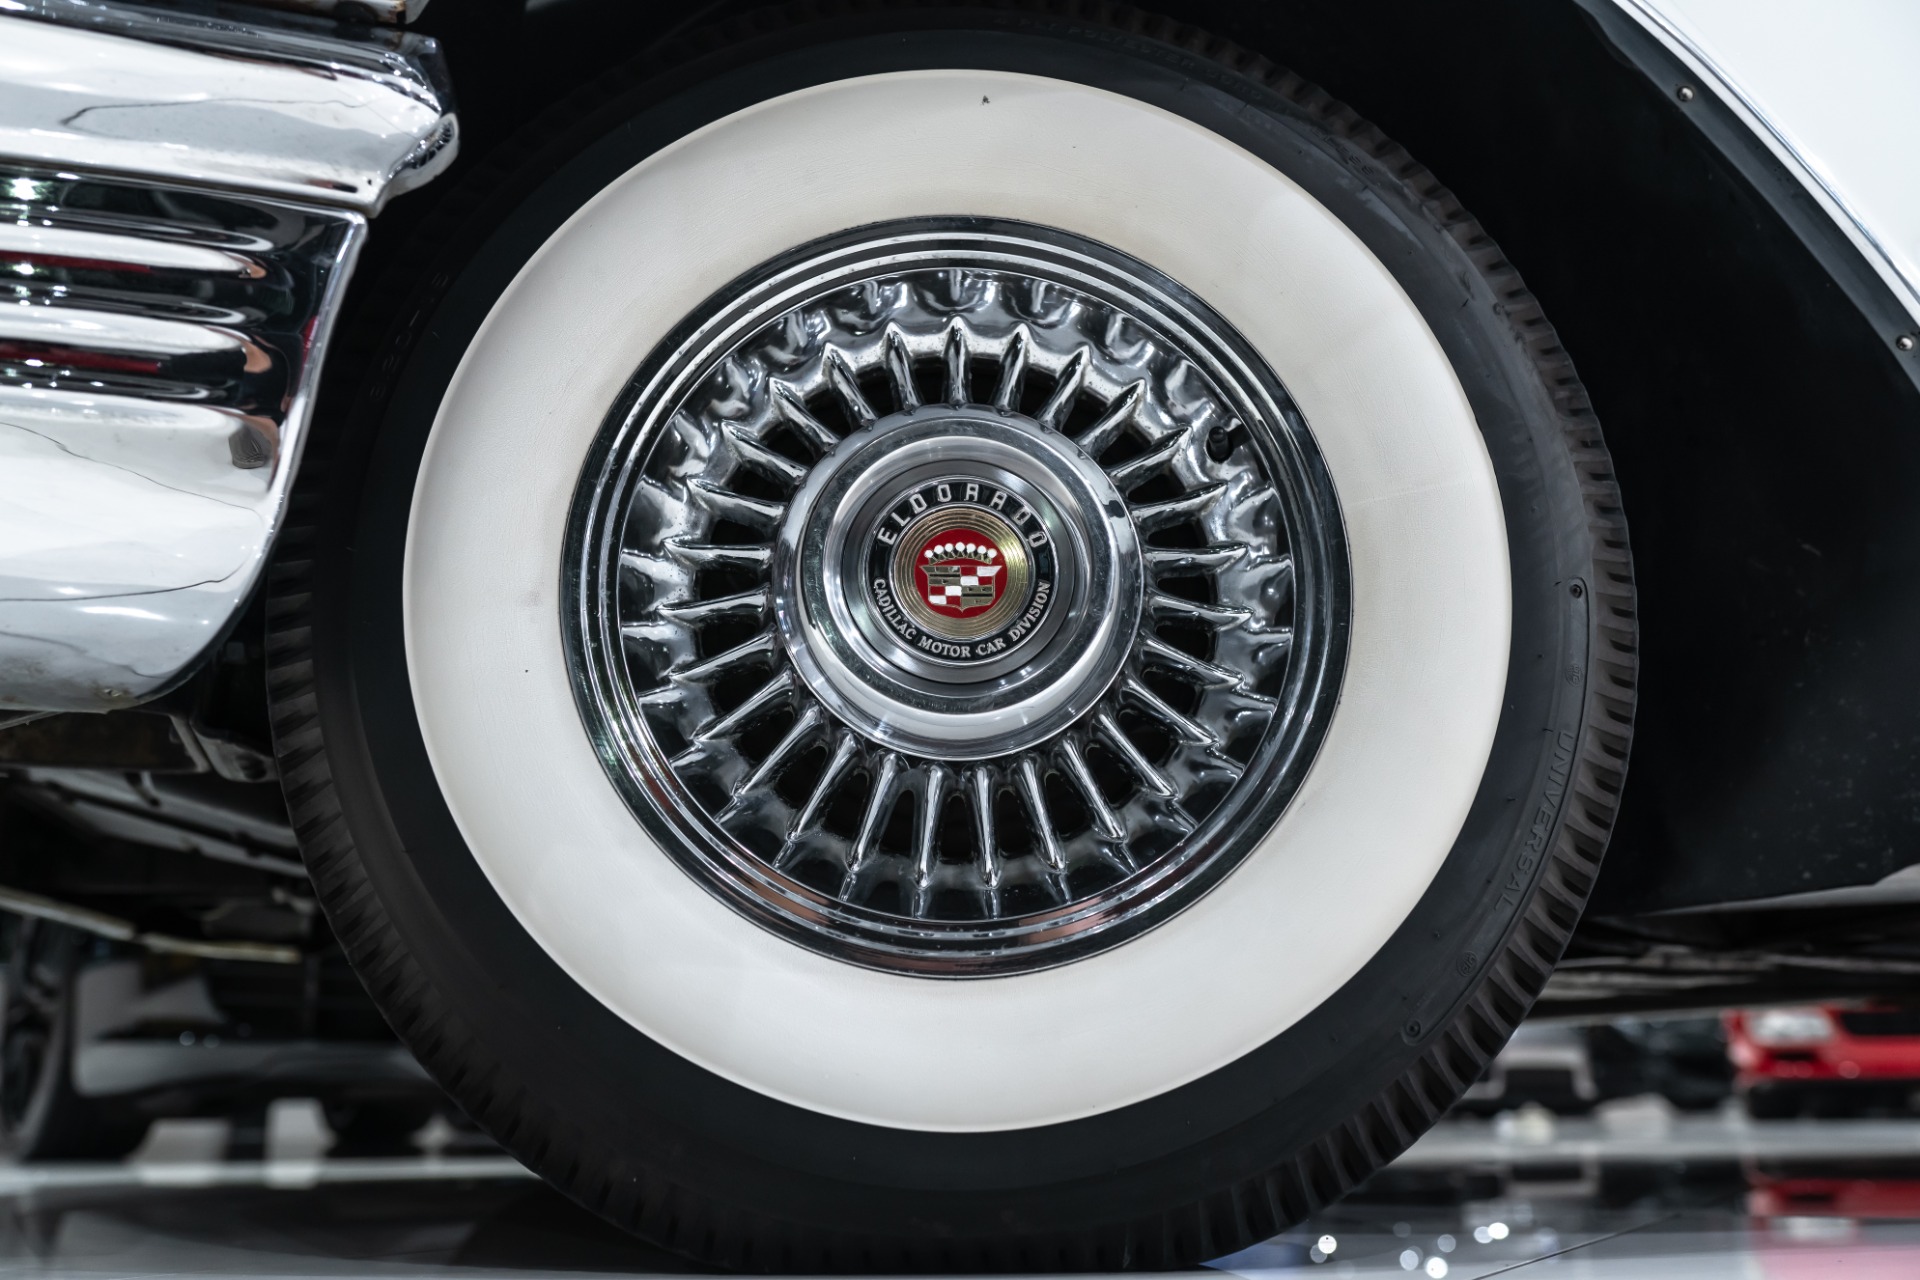 Used-1958-Cadillac-Eldorado-Seville-2-Door-Hardtop-1-of-855-Built-Matching---Rare-Factory-AC-Gorgeous-Color